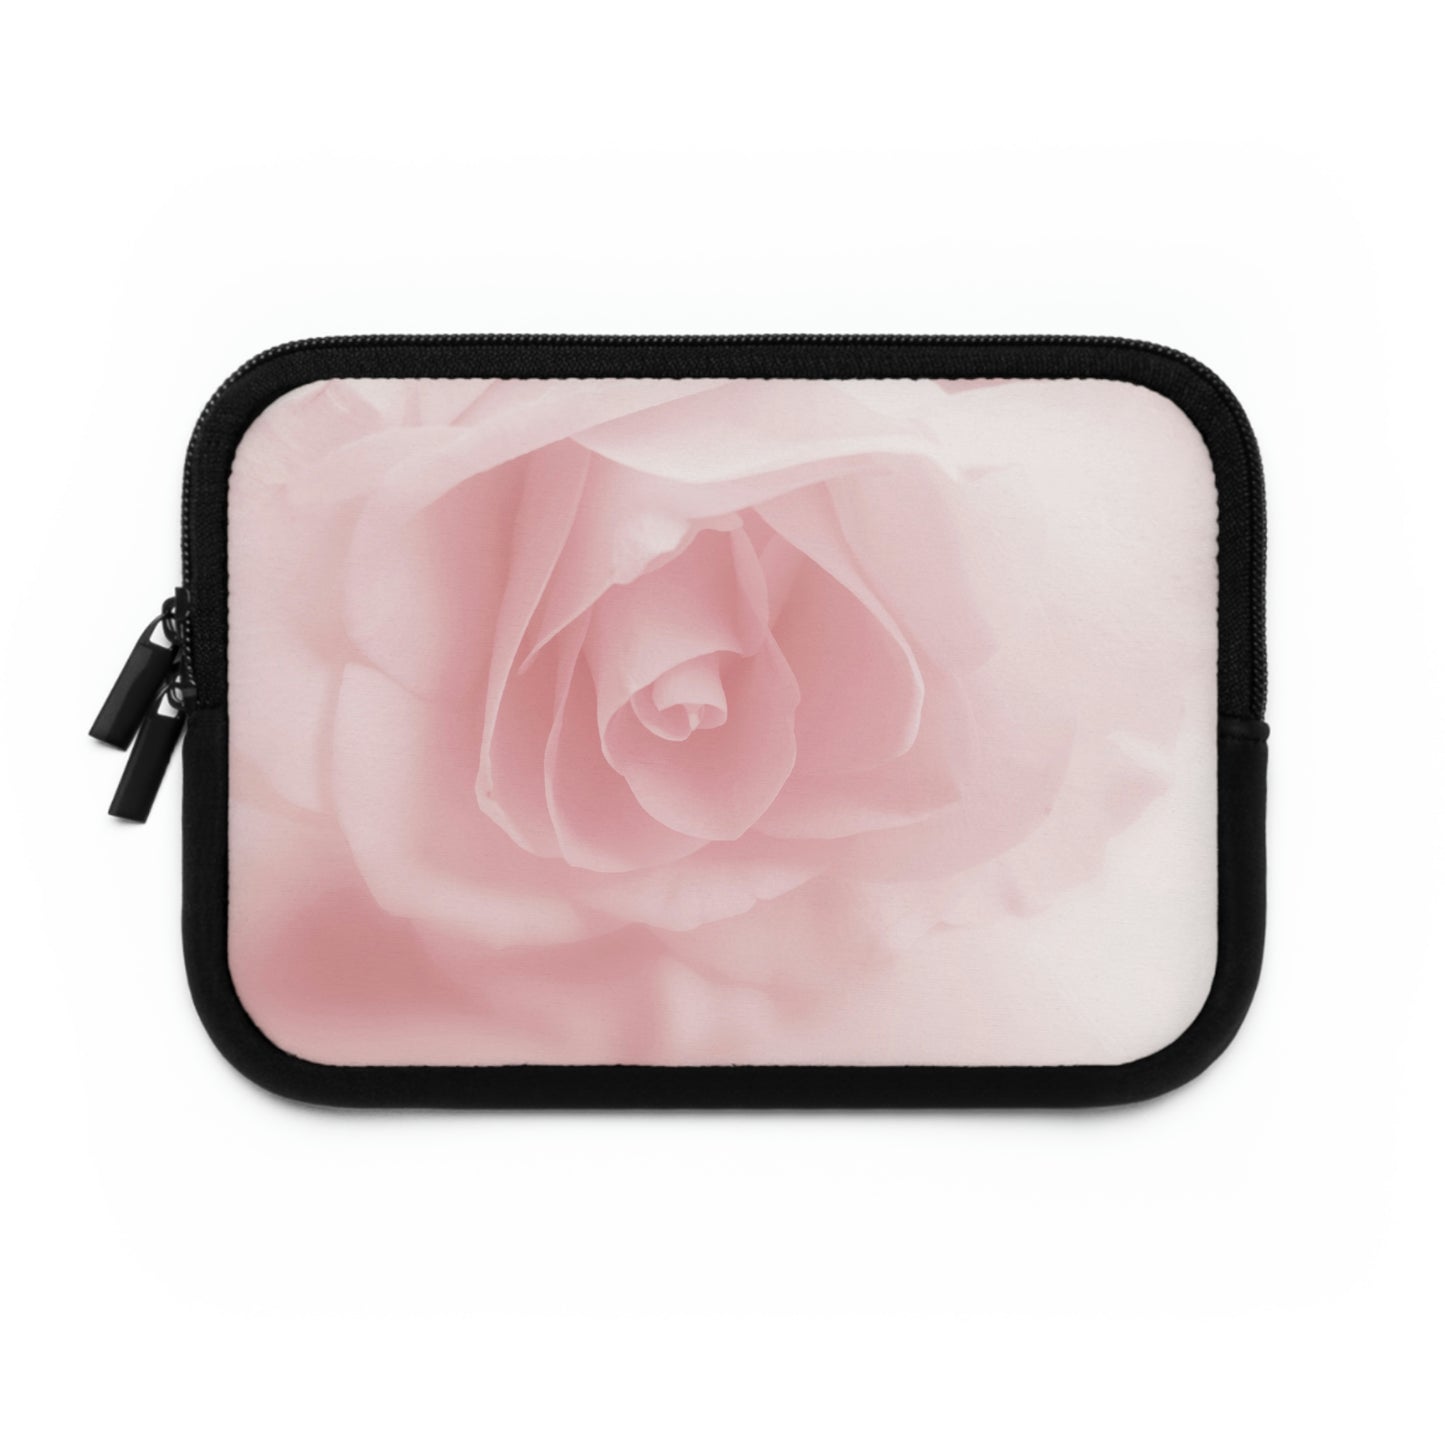 Soft Pink Rose Laptop Sleeve